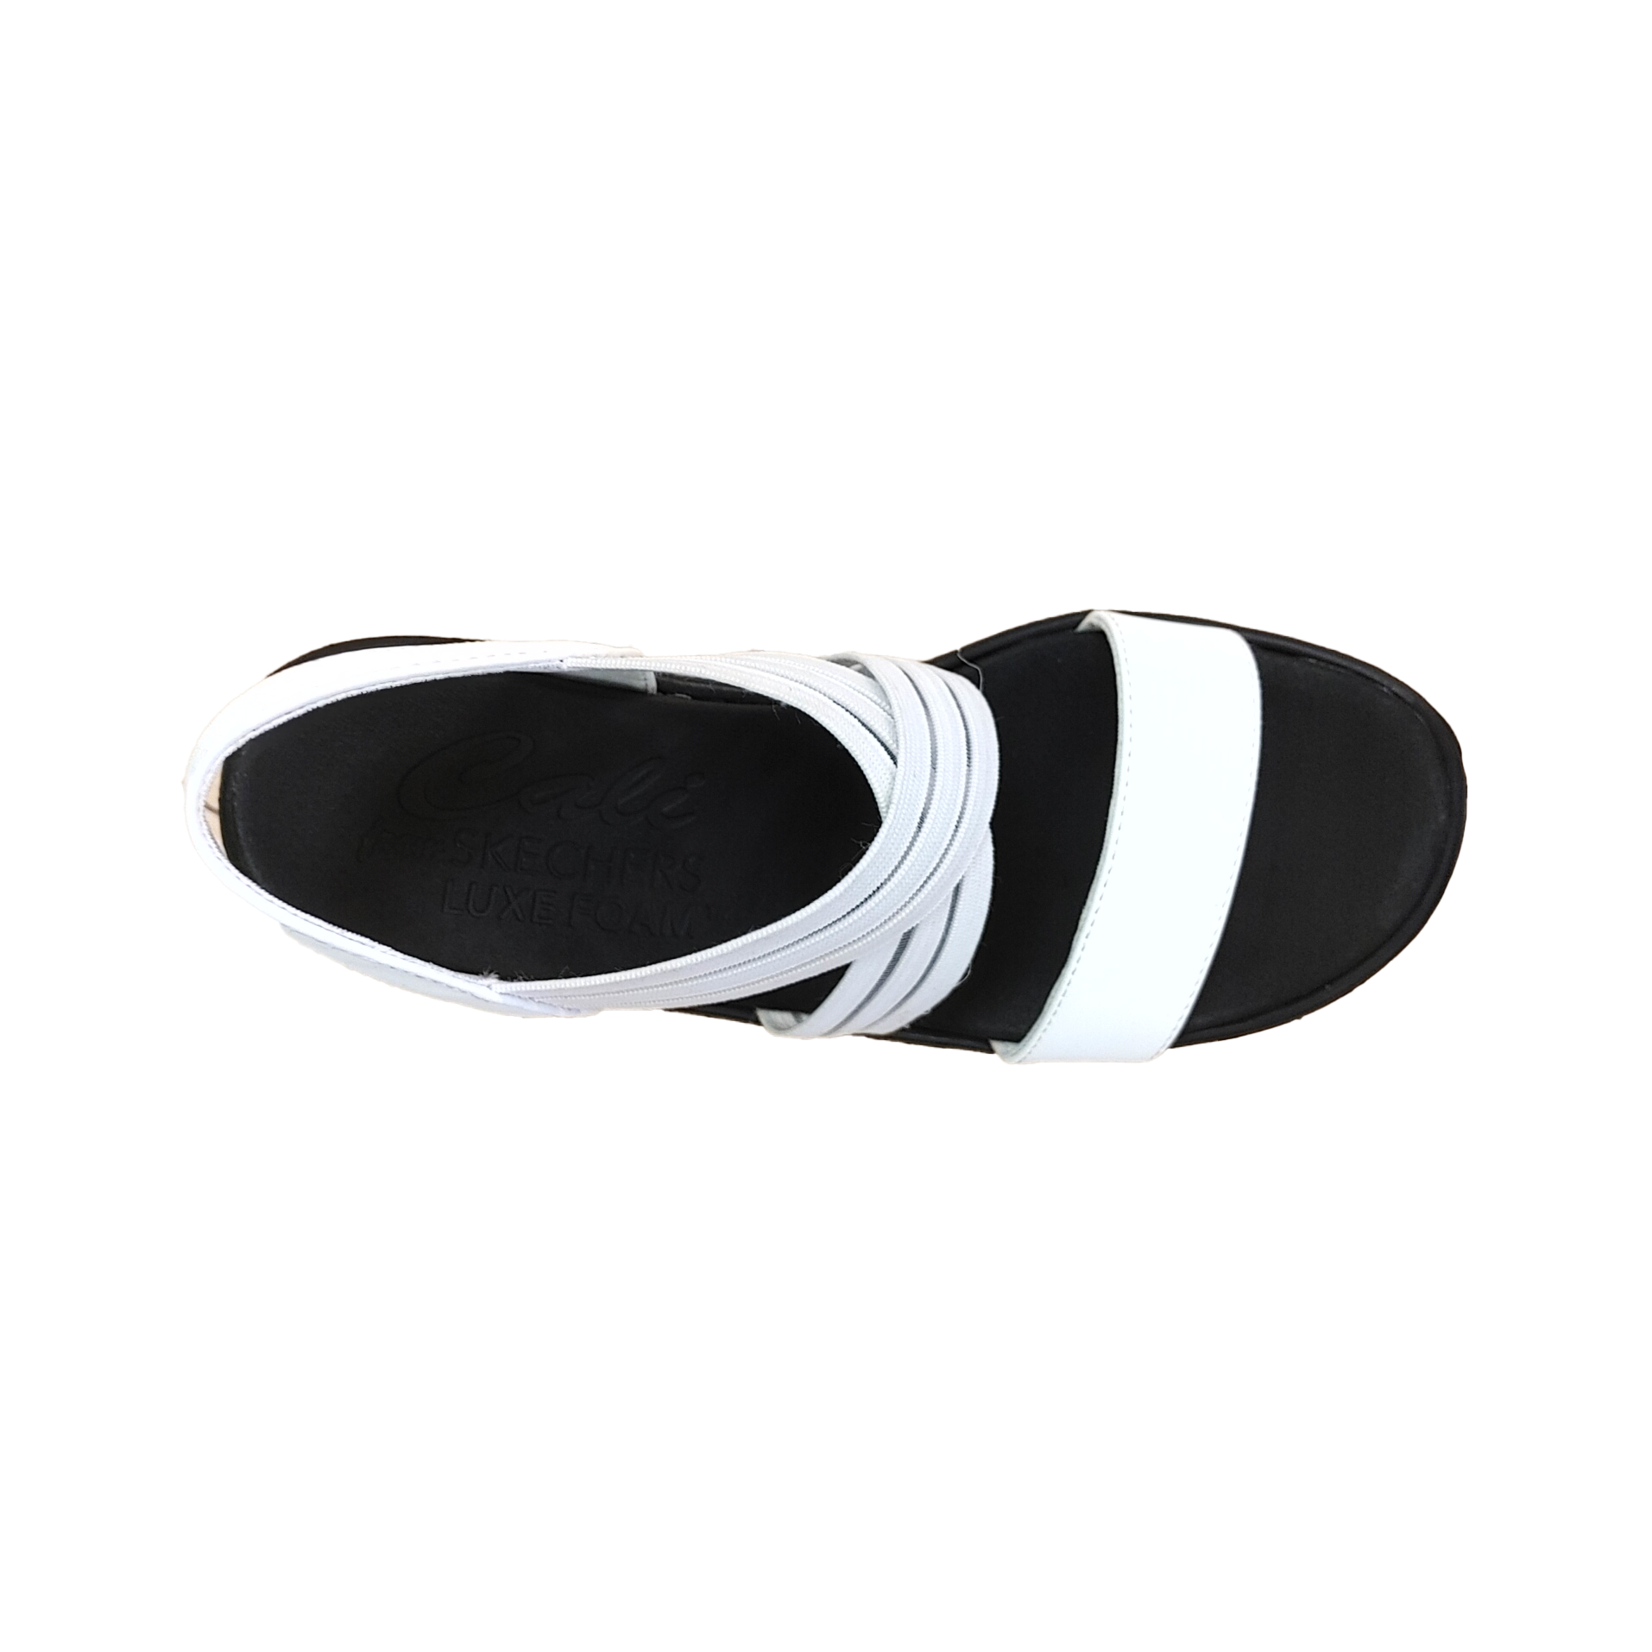 Skechers Skechers Cali multi strap wedge sandal